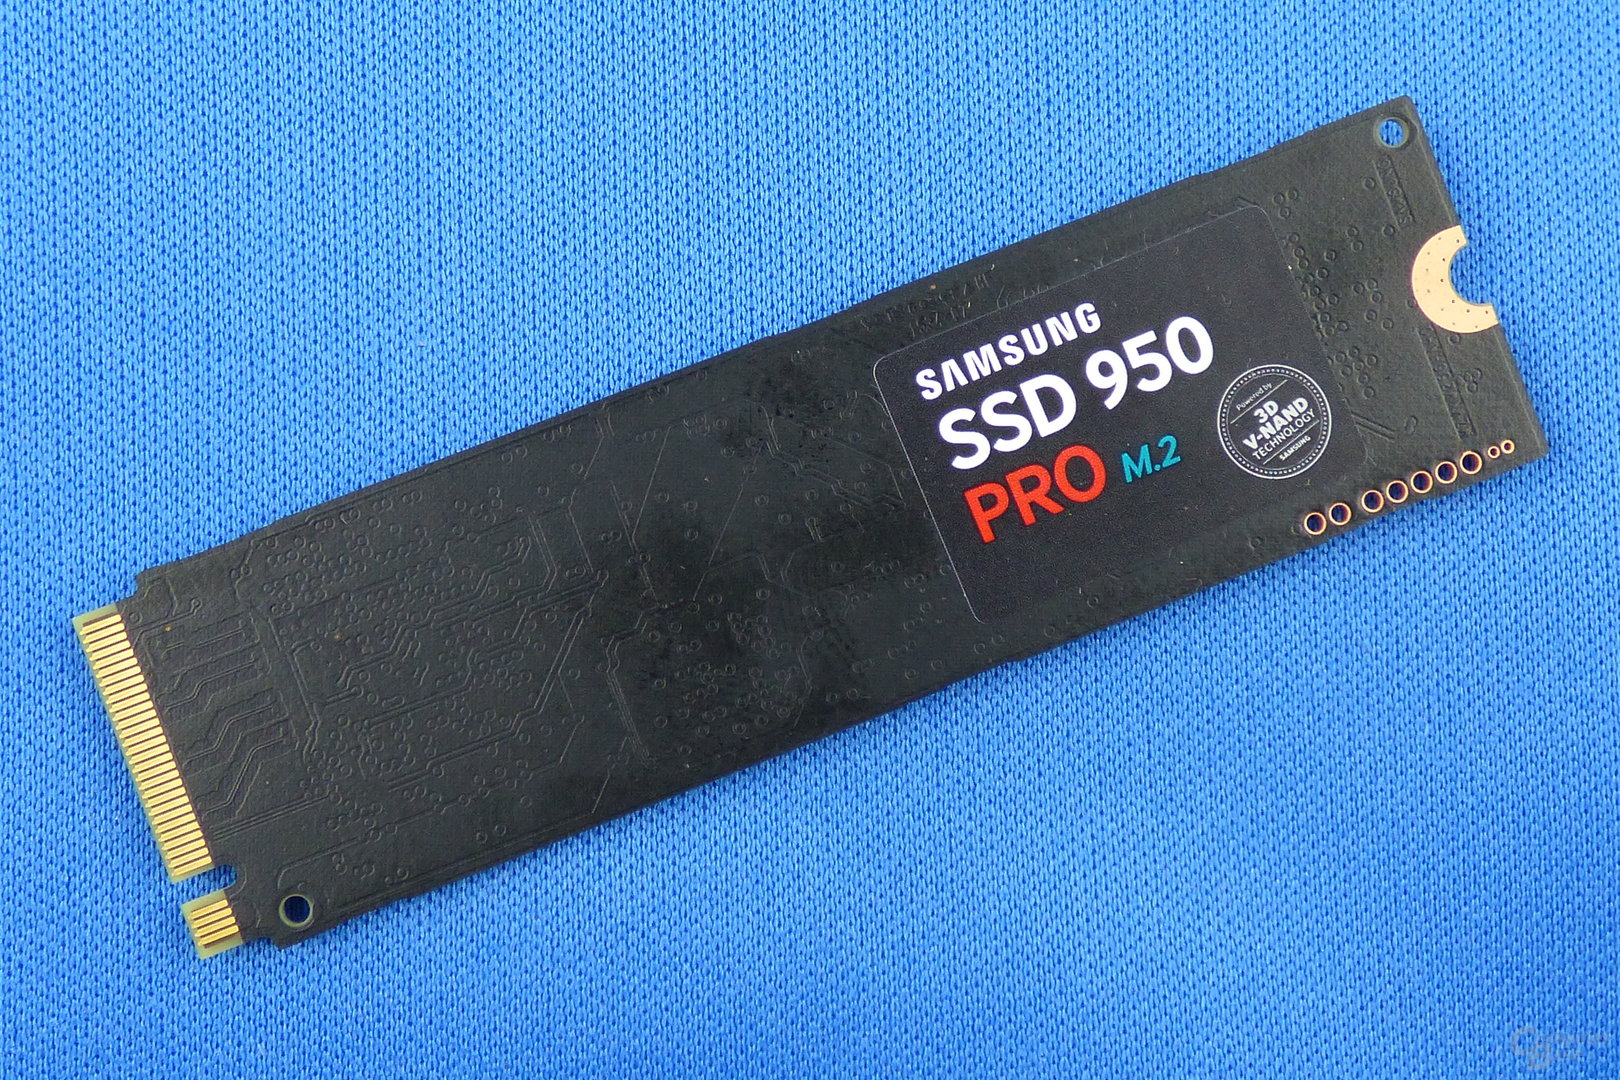 Samsung 950 Pro 256 GB